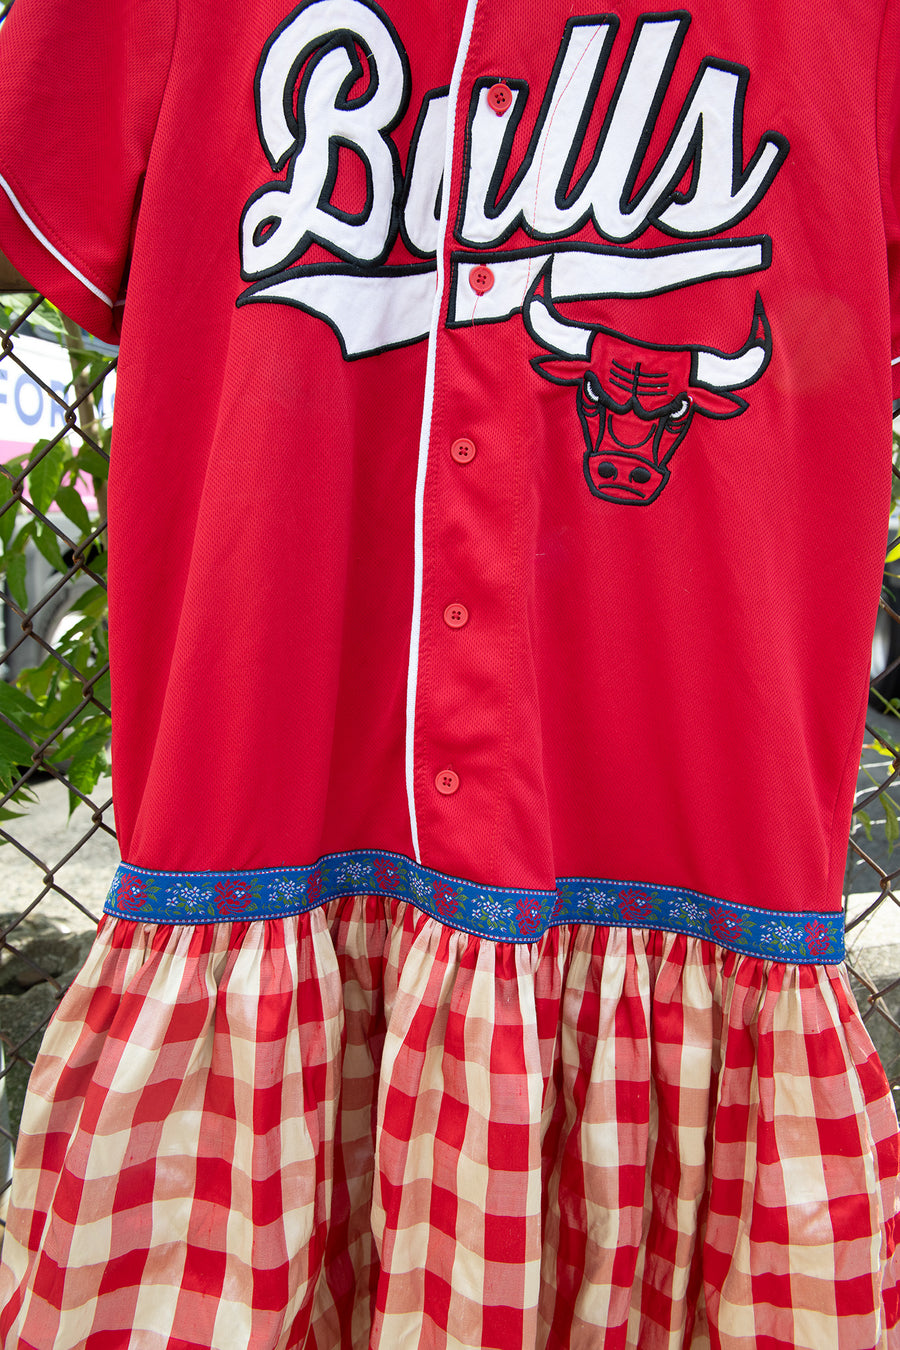 One-of-a-Kind Vintage Bulls Jersey Dress